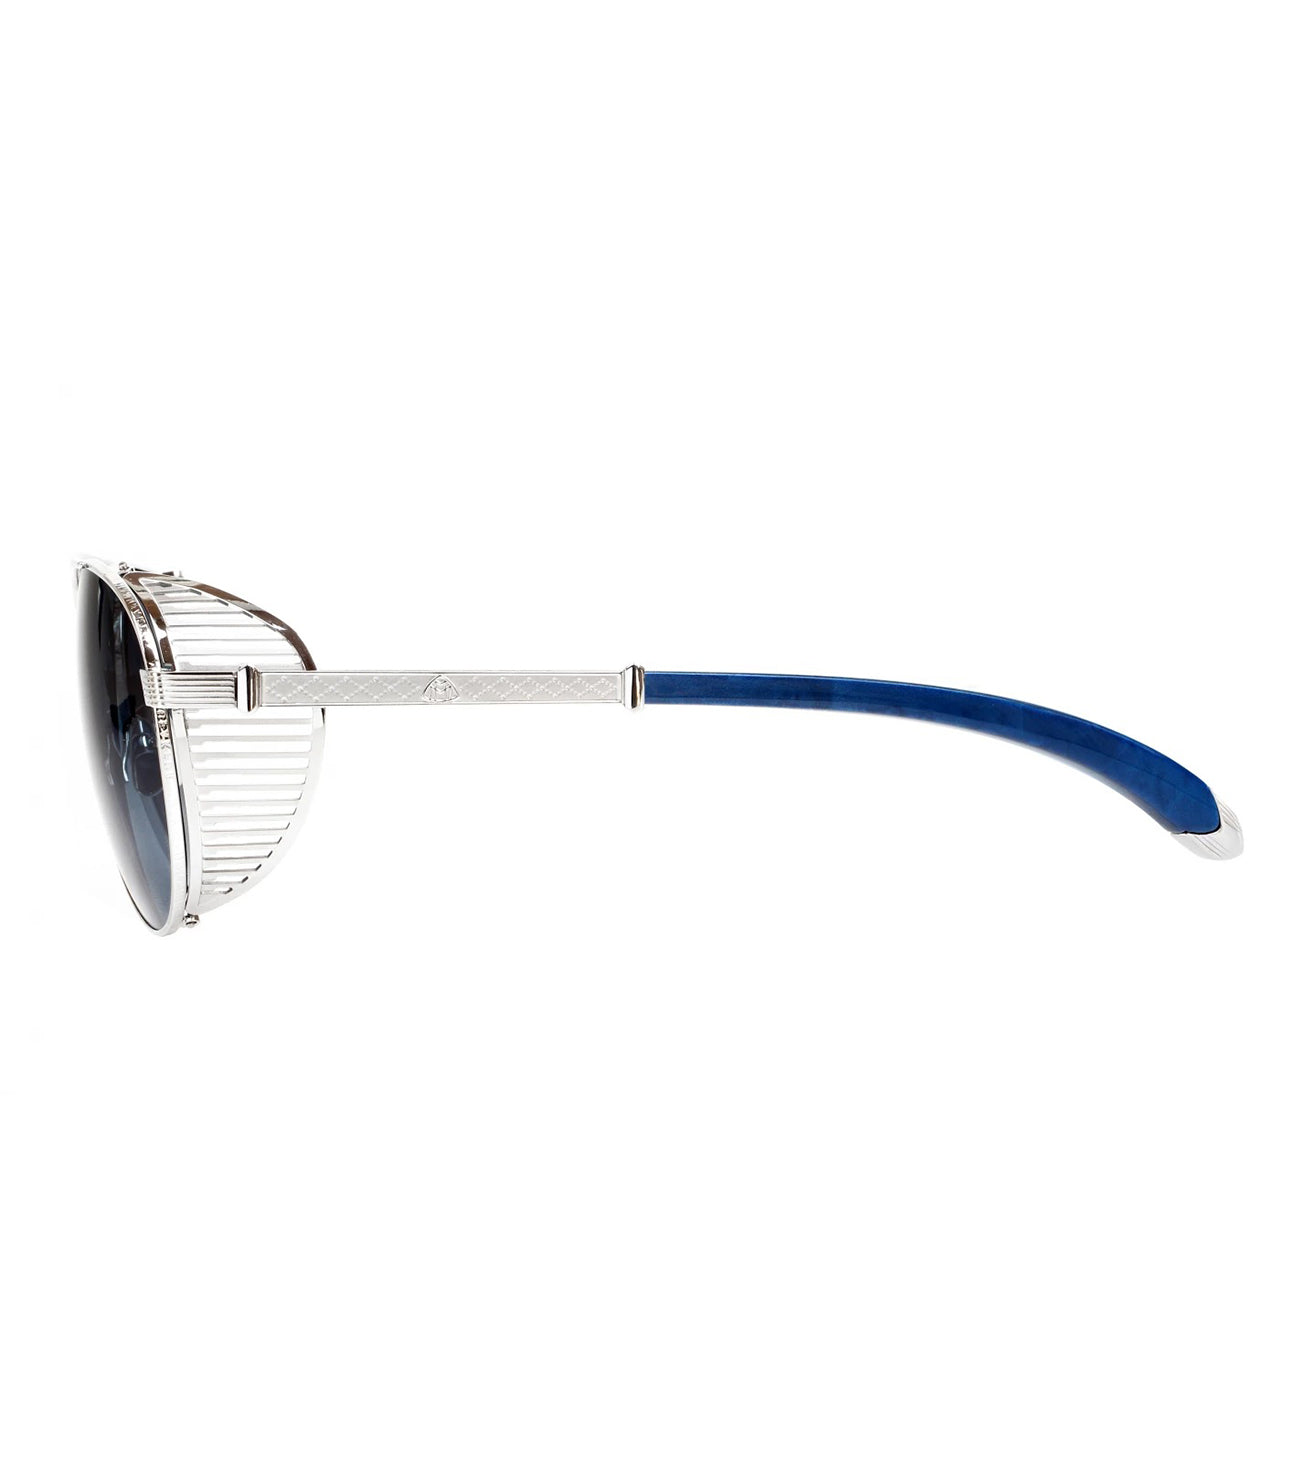 Maybach The Vision - I Men's Blue Aviator Sunglasses